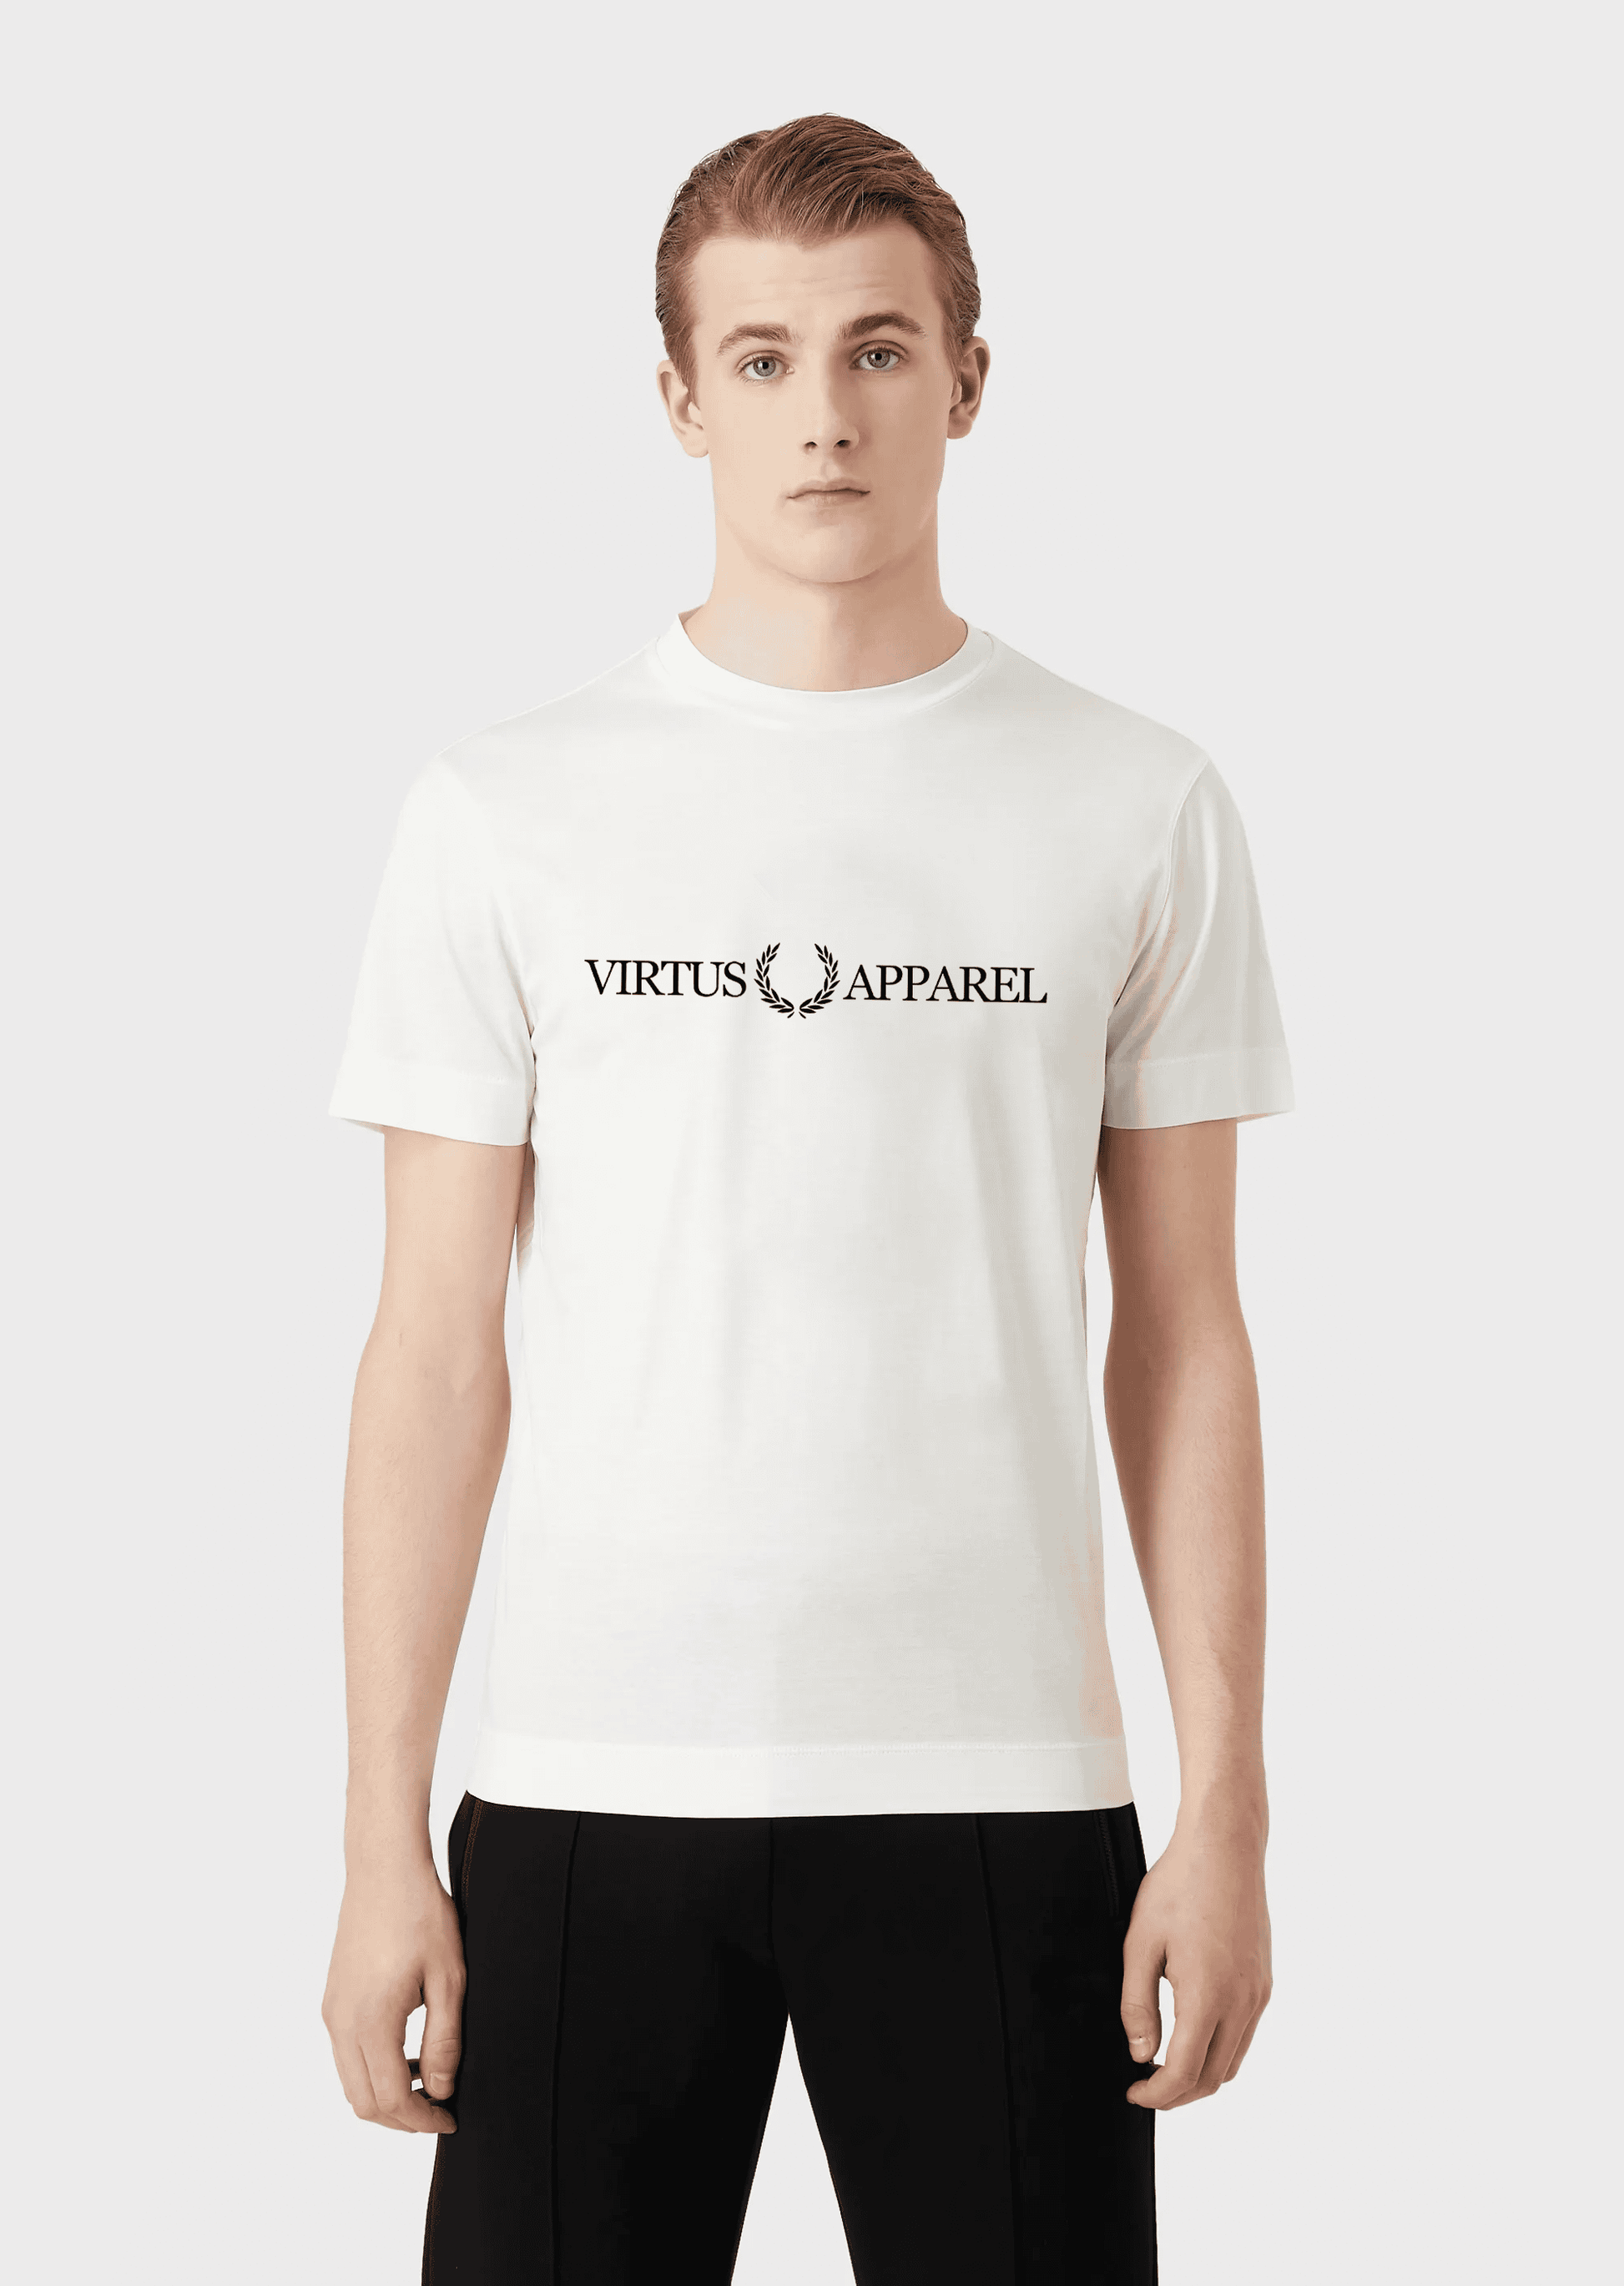 Virtus Apparel T-Shirt Store Virtus – Apparel